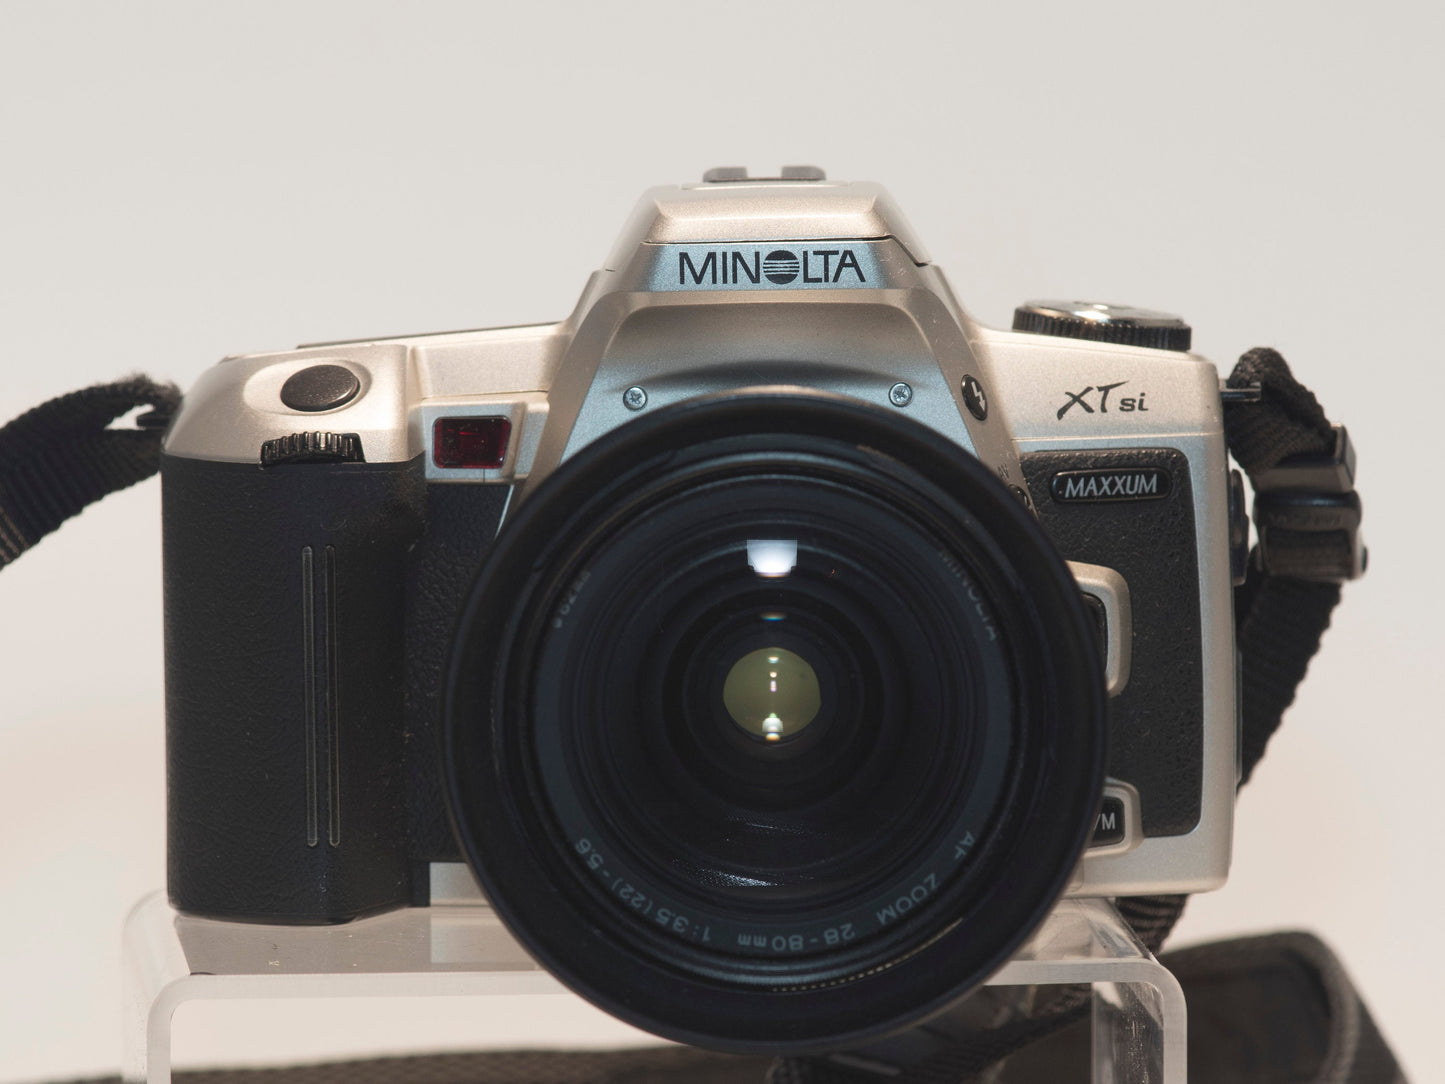 Minolta Maxxum XTsi 35mm film SLR